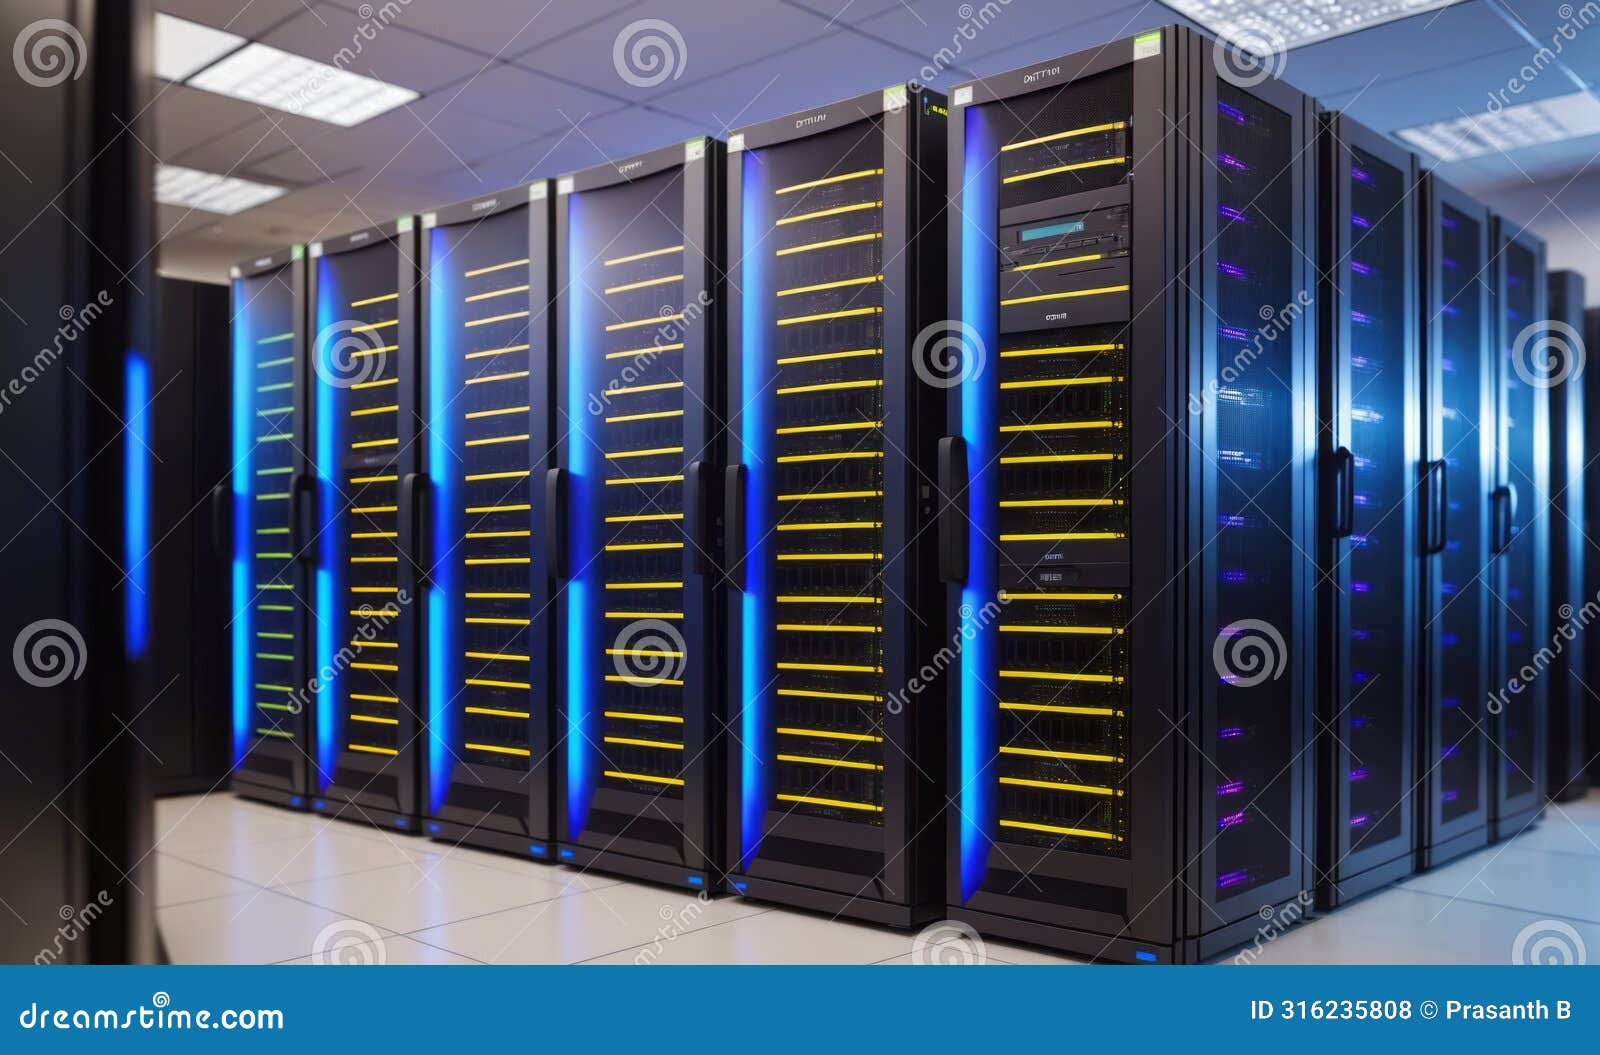 server technology datum network computer information rack room